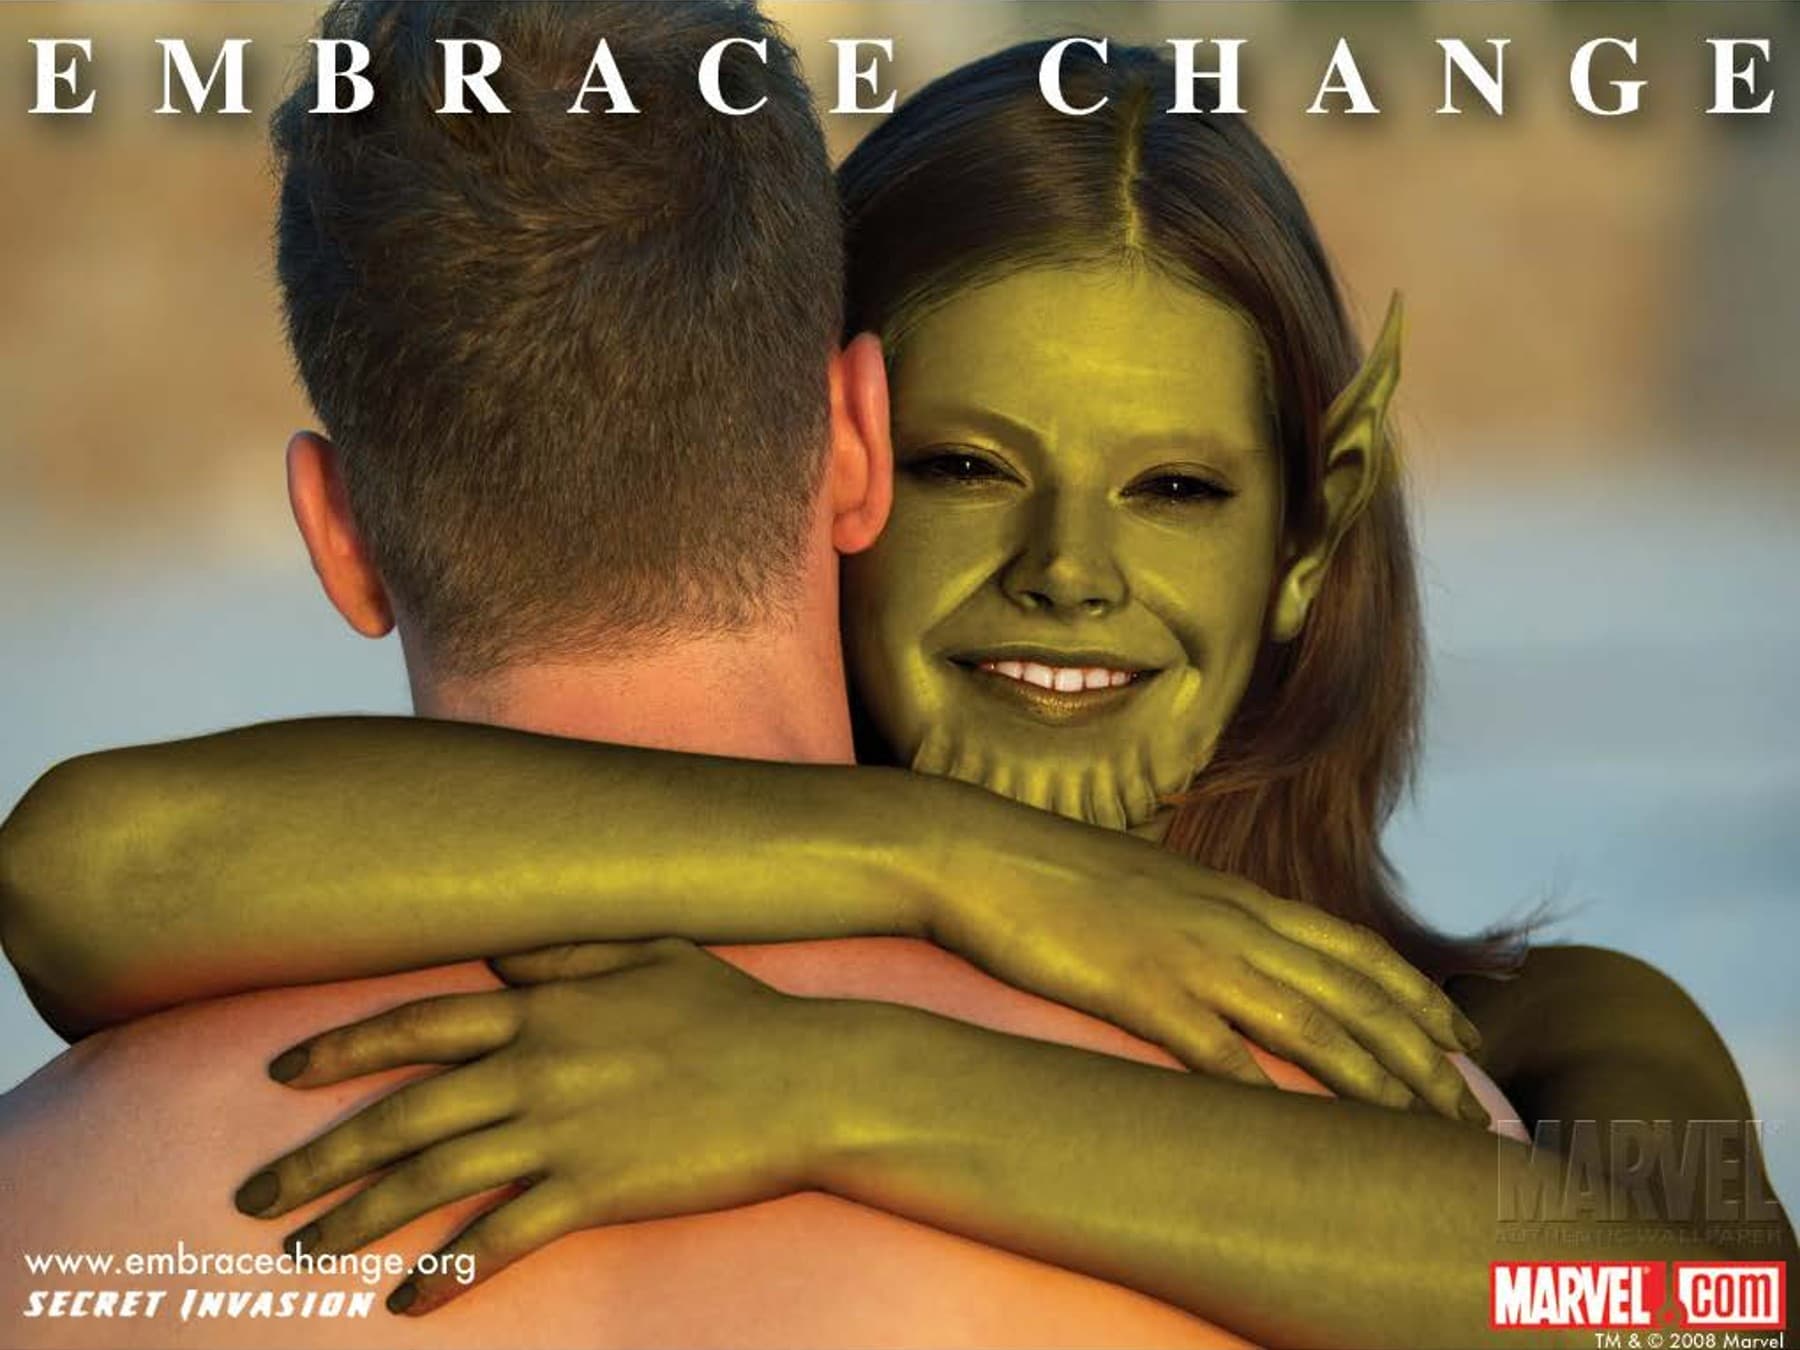 Embrace Change Promotional Image: Skrull Woman Embraces Human Man